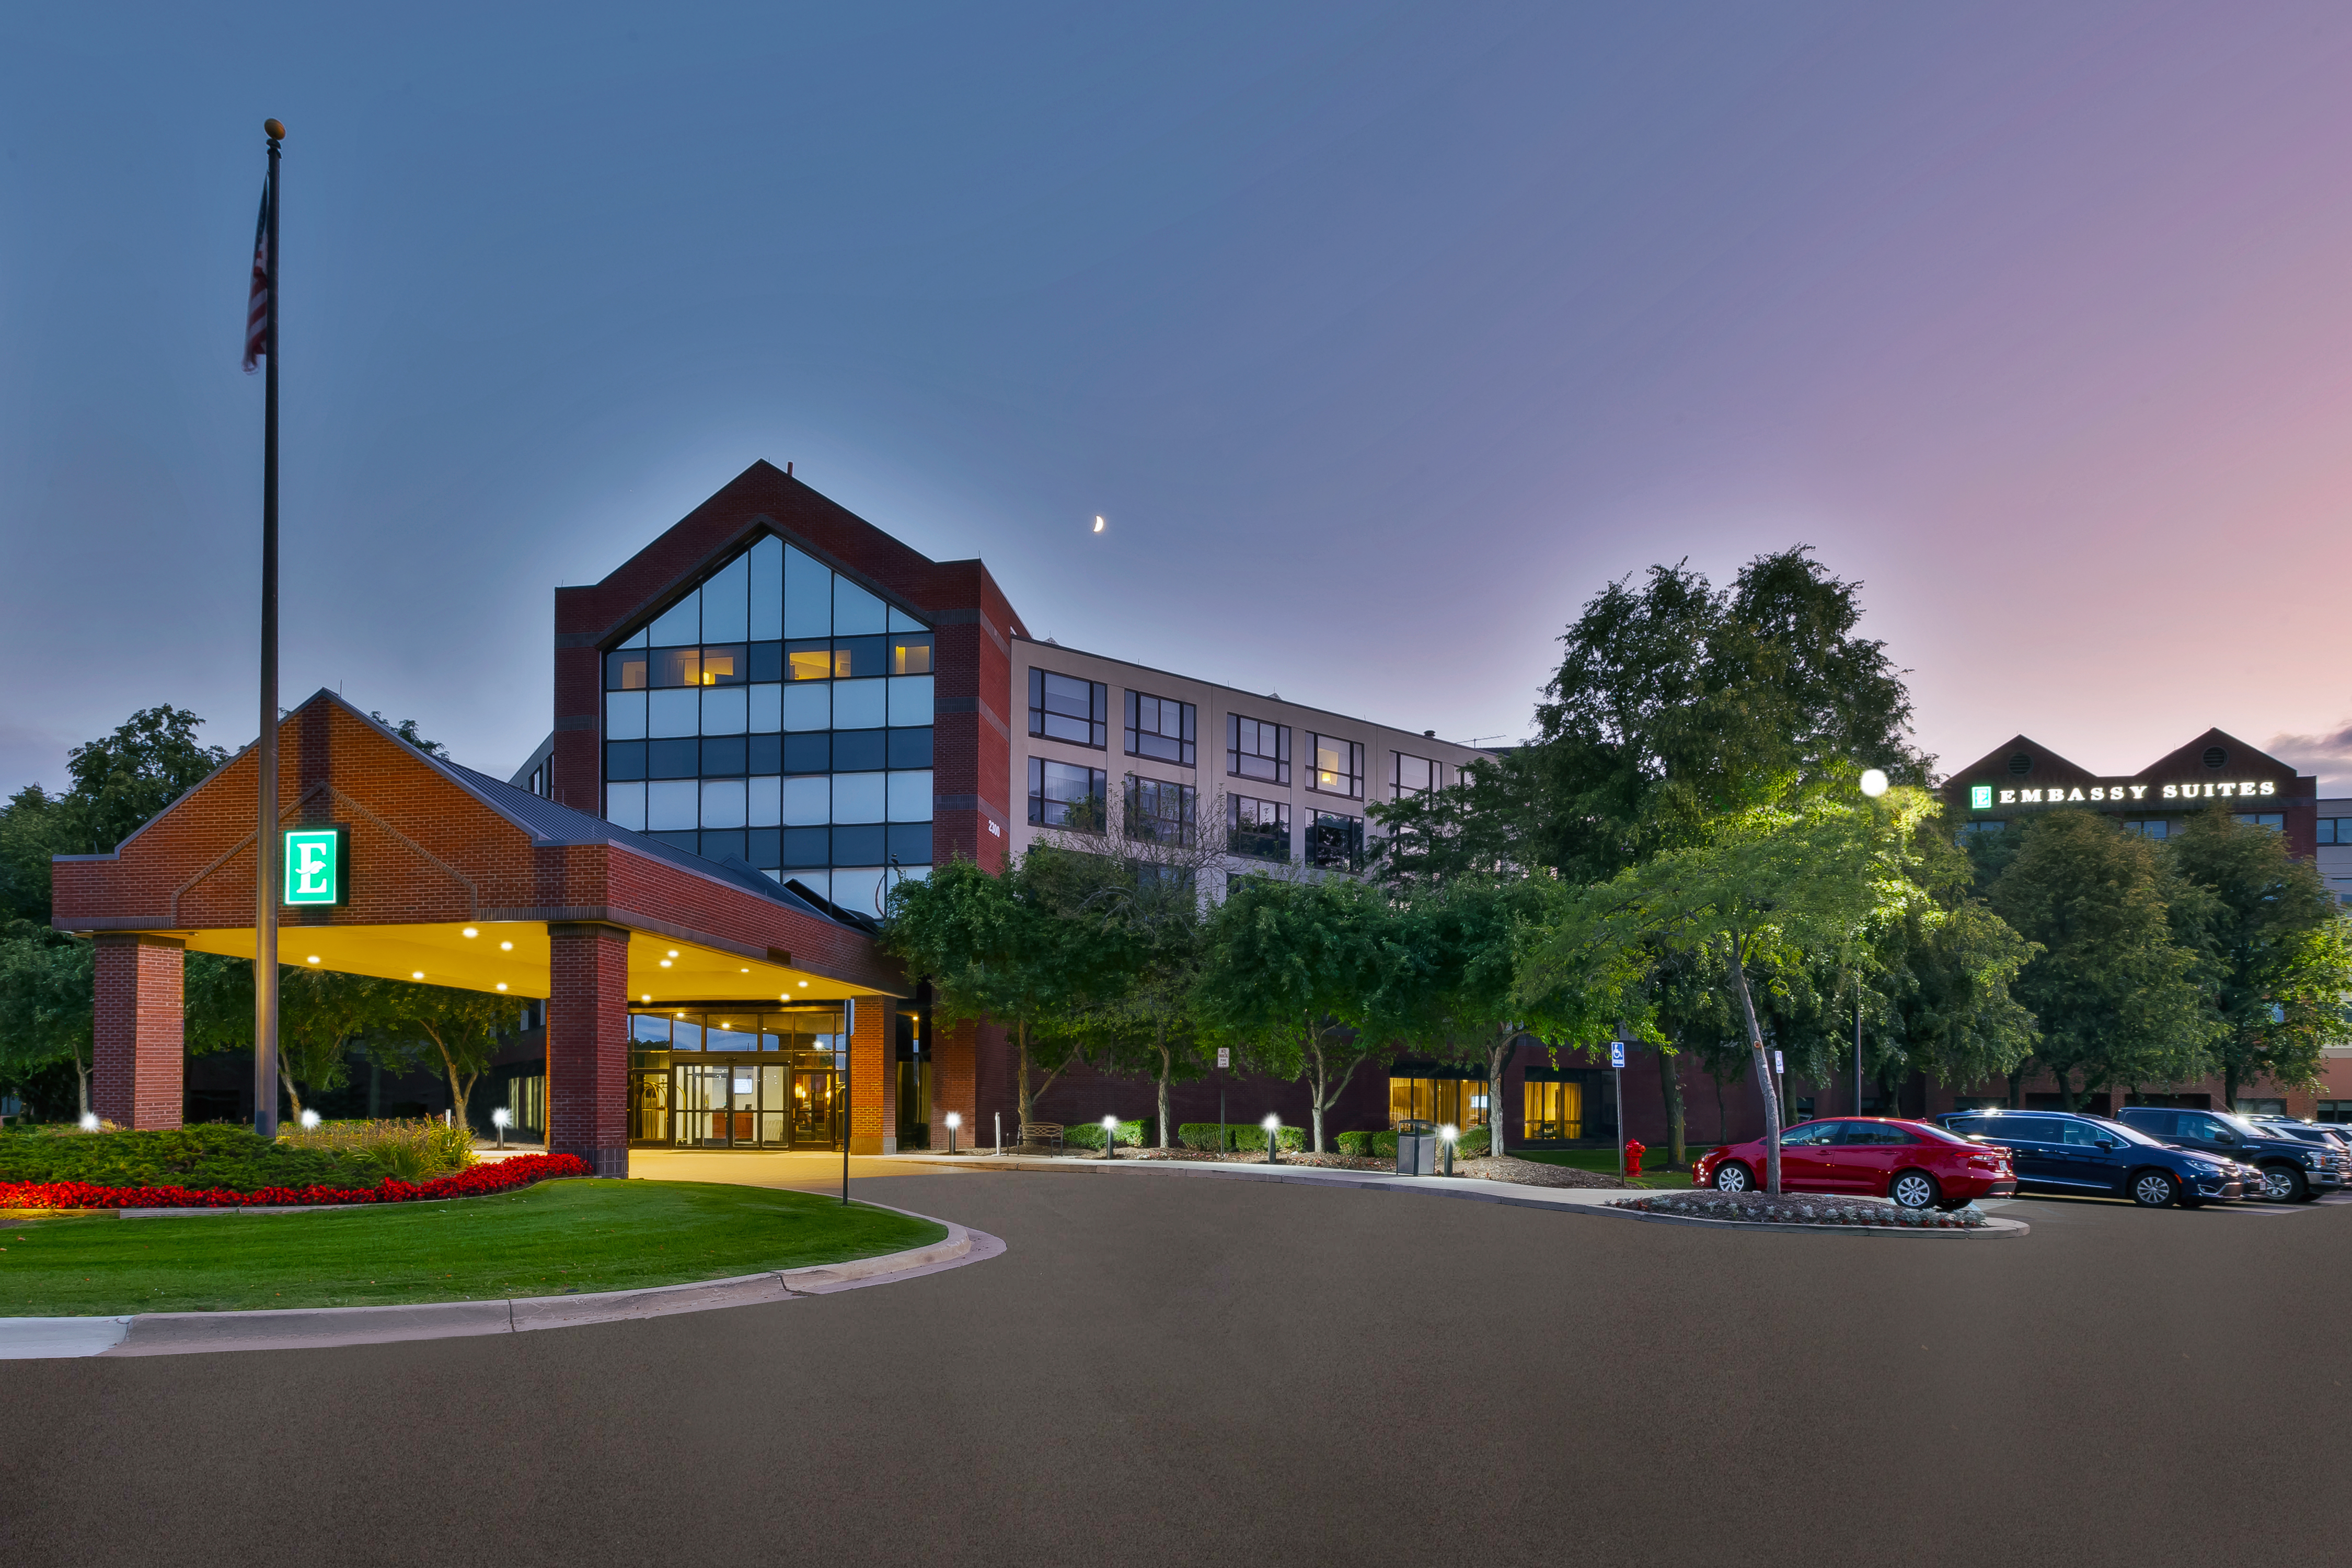 Photo of Embassy Suites by Hilton Auburn Hills, Auburn Hills, MI